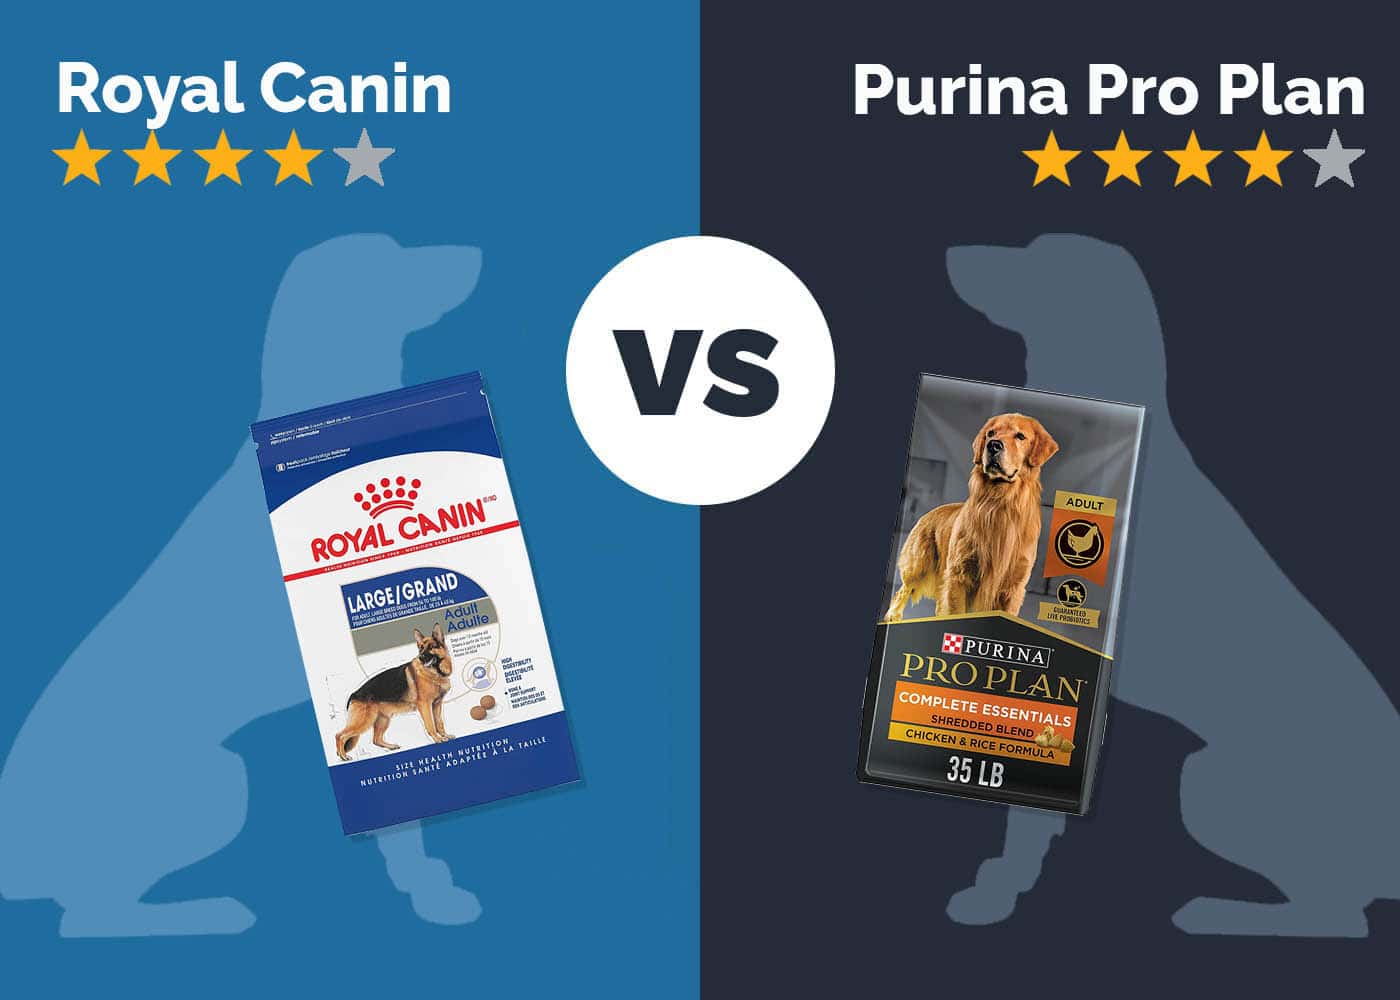 Royal Canin vs Purina Pro Plan